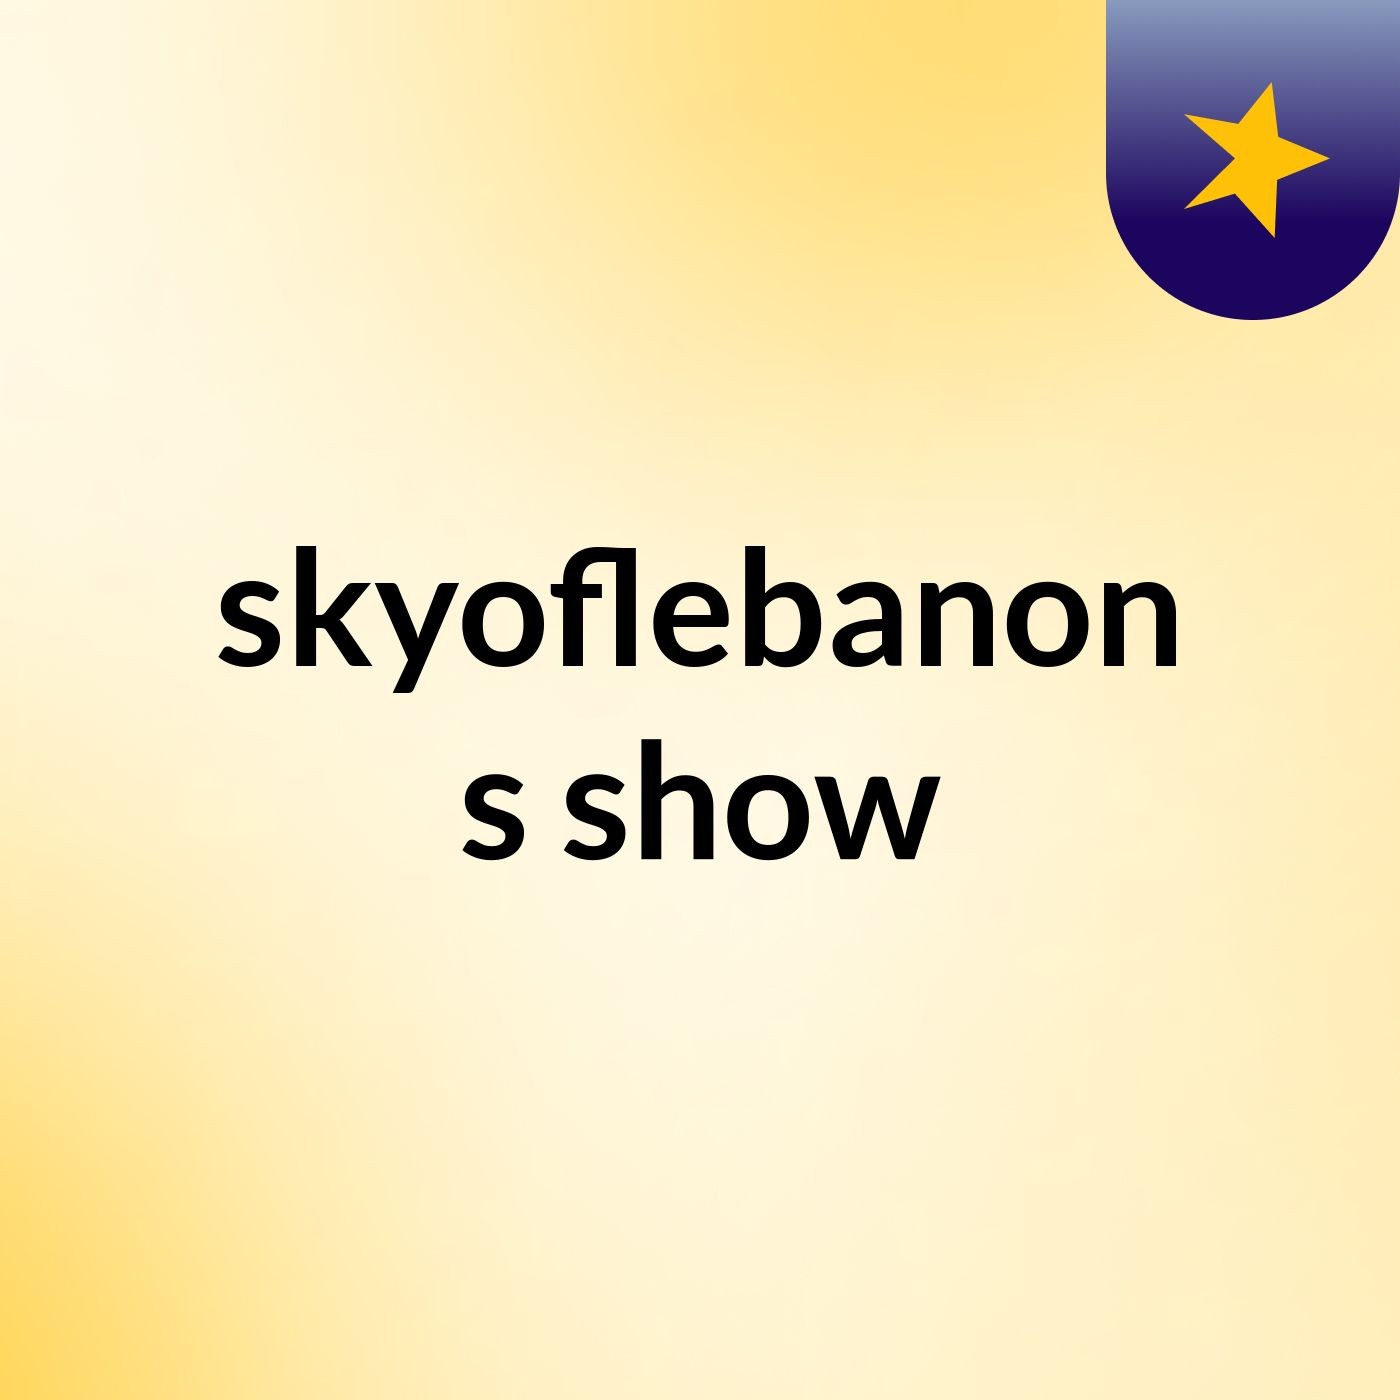 skyoflebanon's show